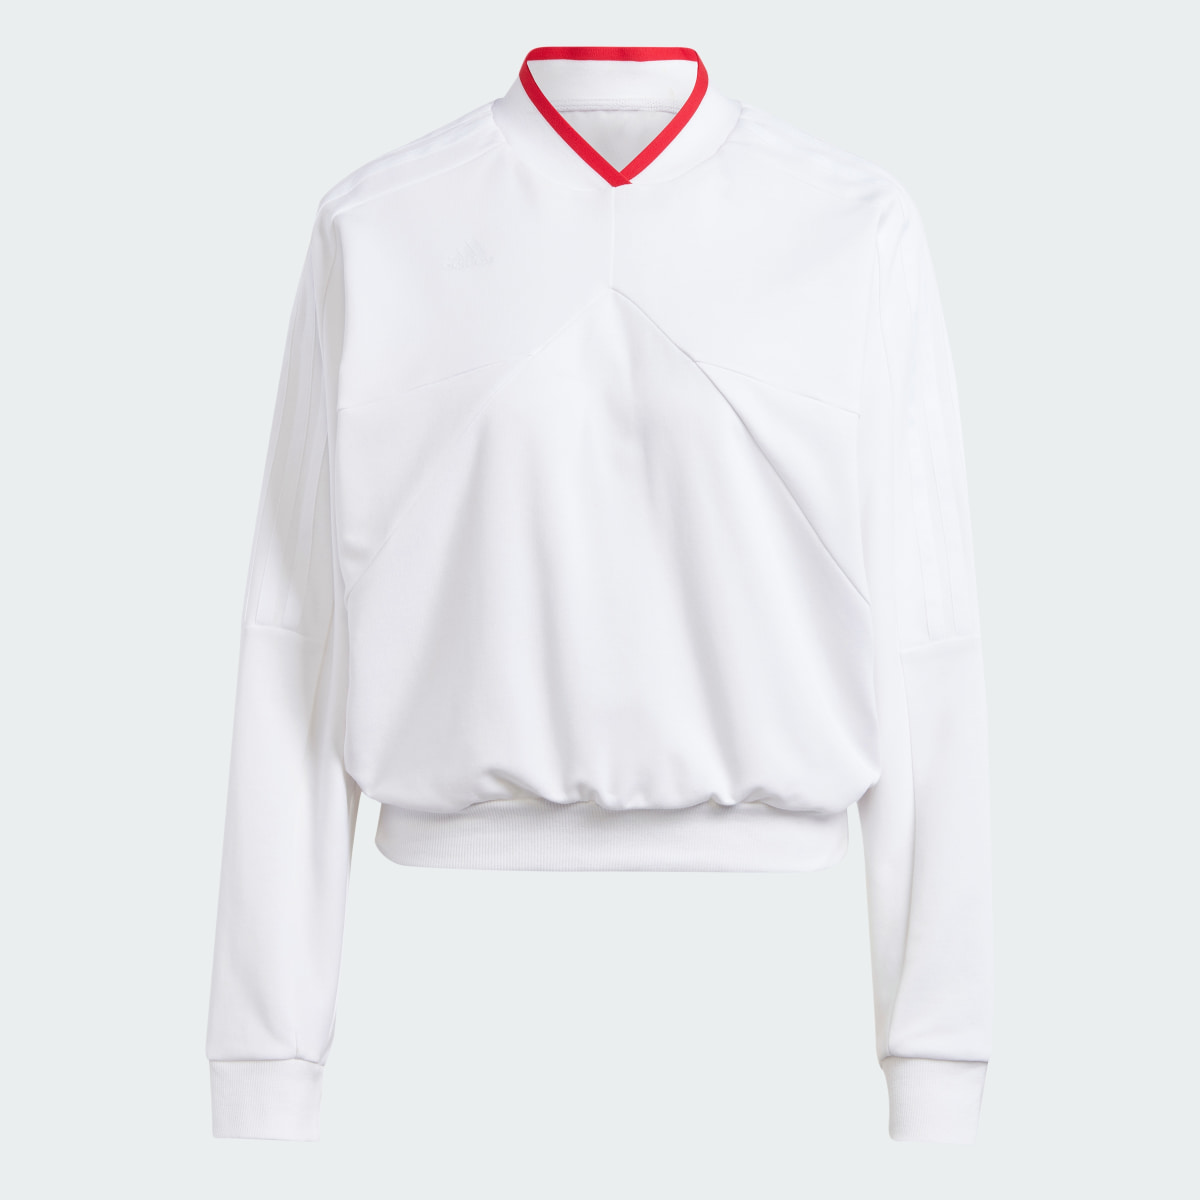 Adidas Tiro Sweatshirt. 6